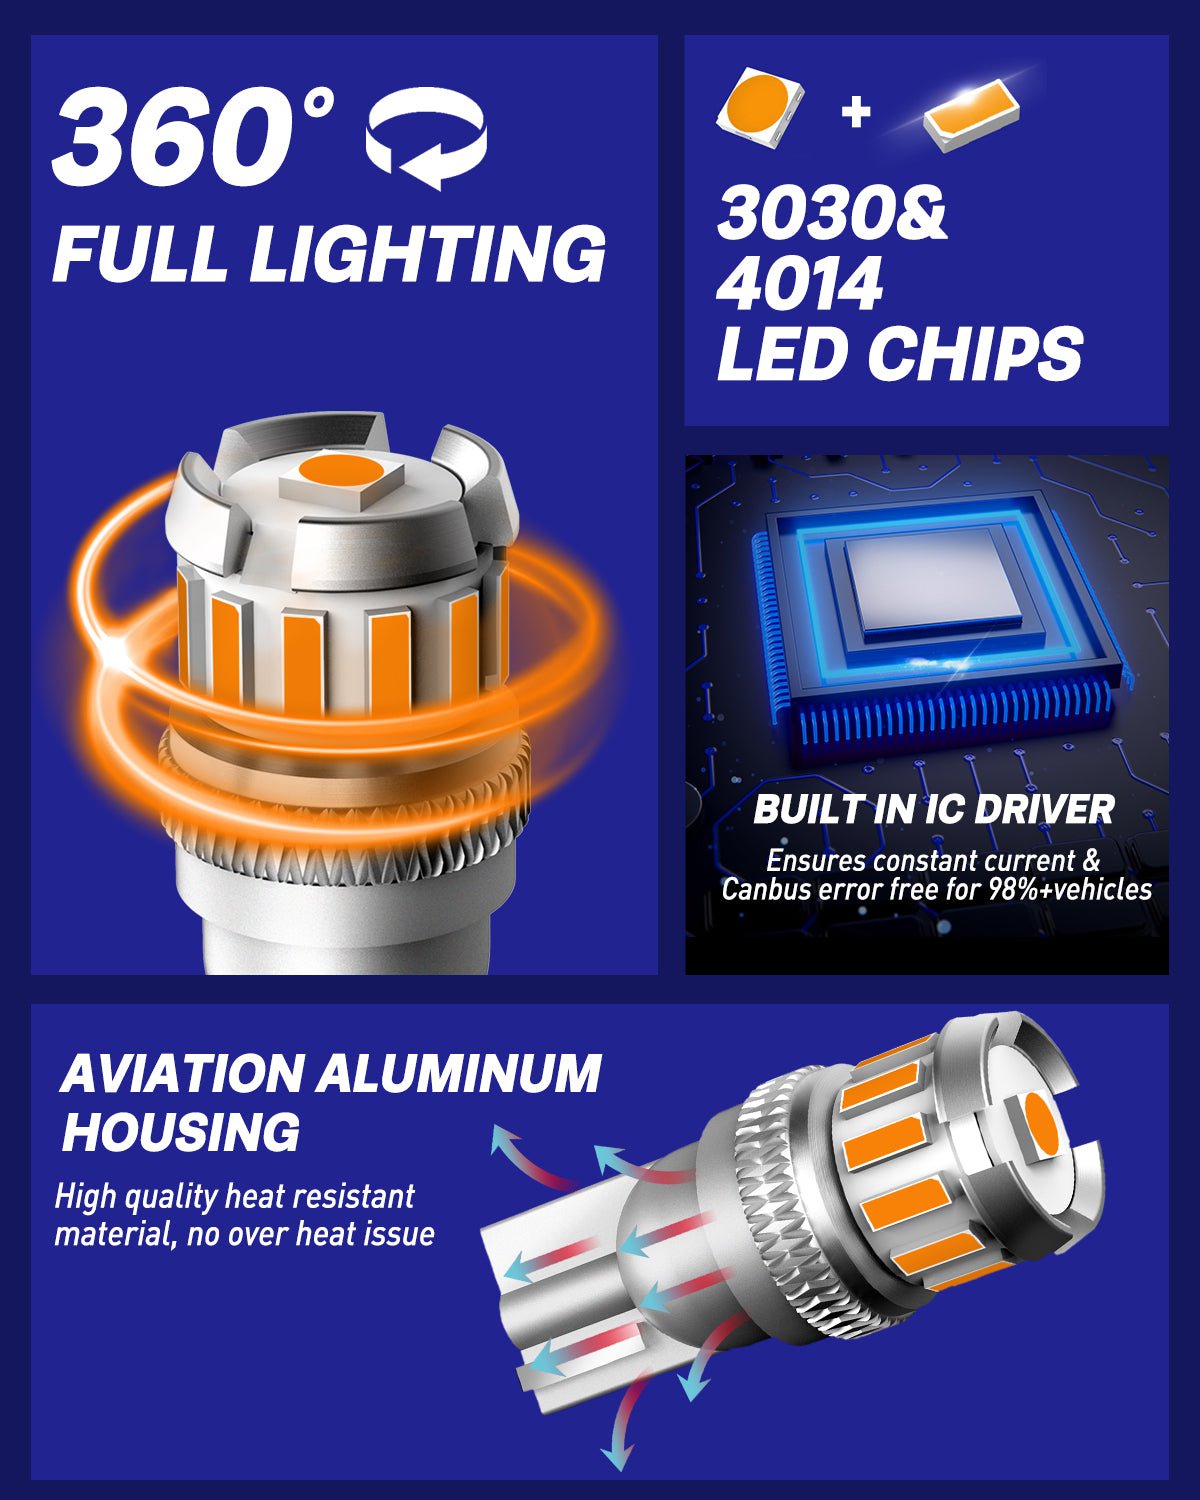 T10 194 168 2825 w5w bulbs - 3014 series 18 LED – Fyre Flys